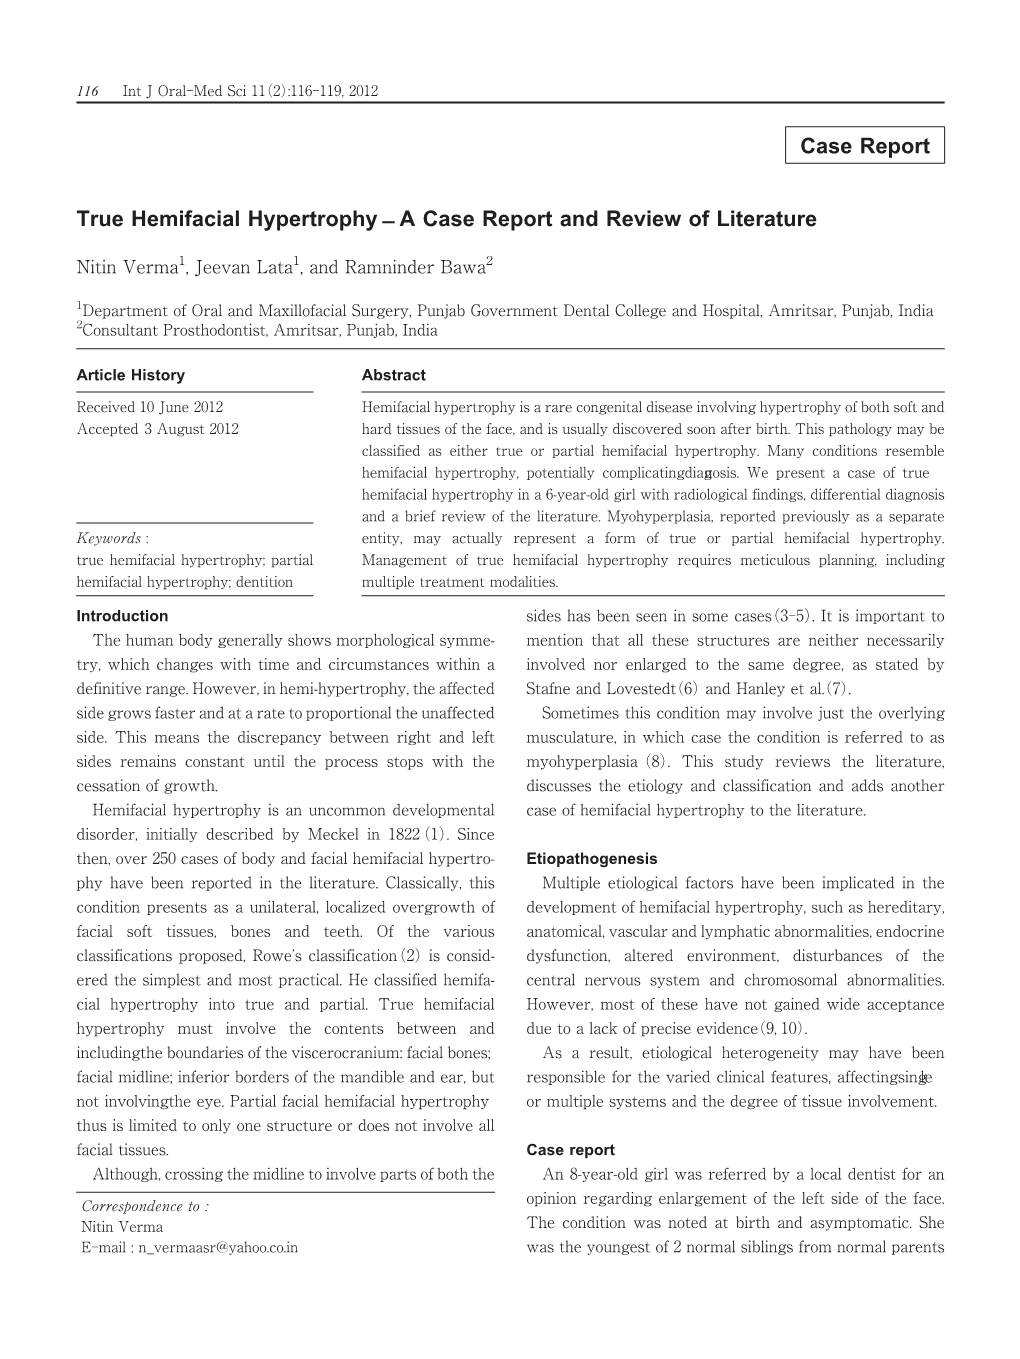 Case Report True Hemifacial Hypertrophy ̶A Case